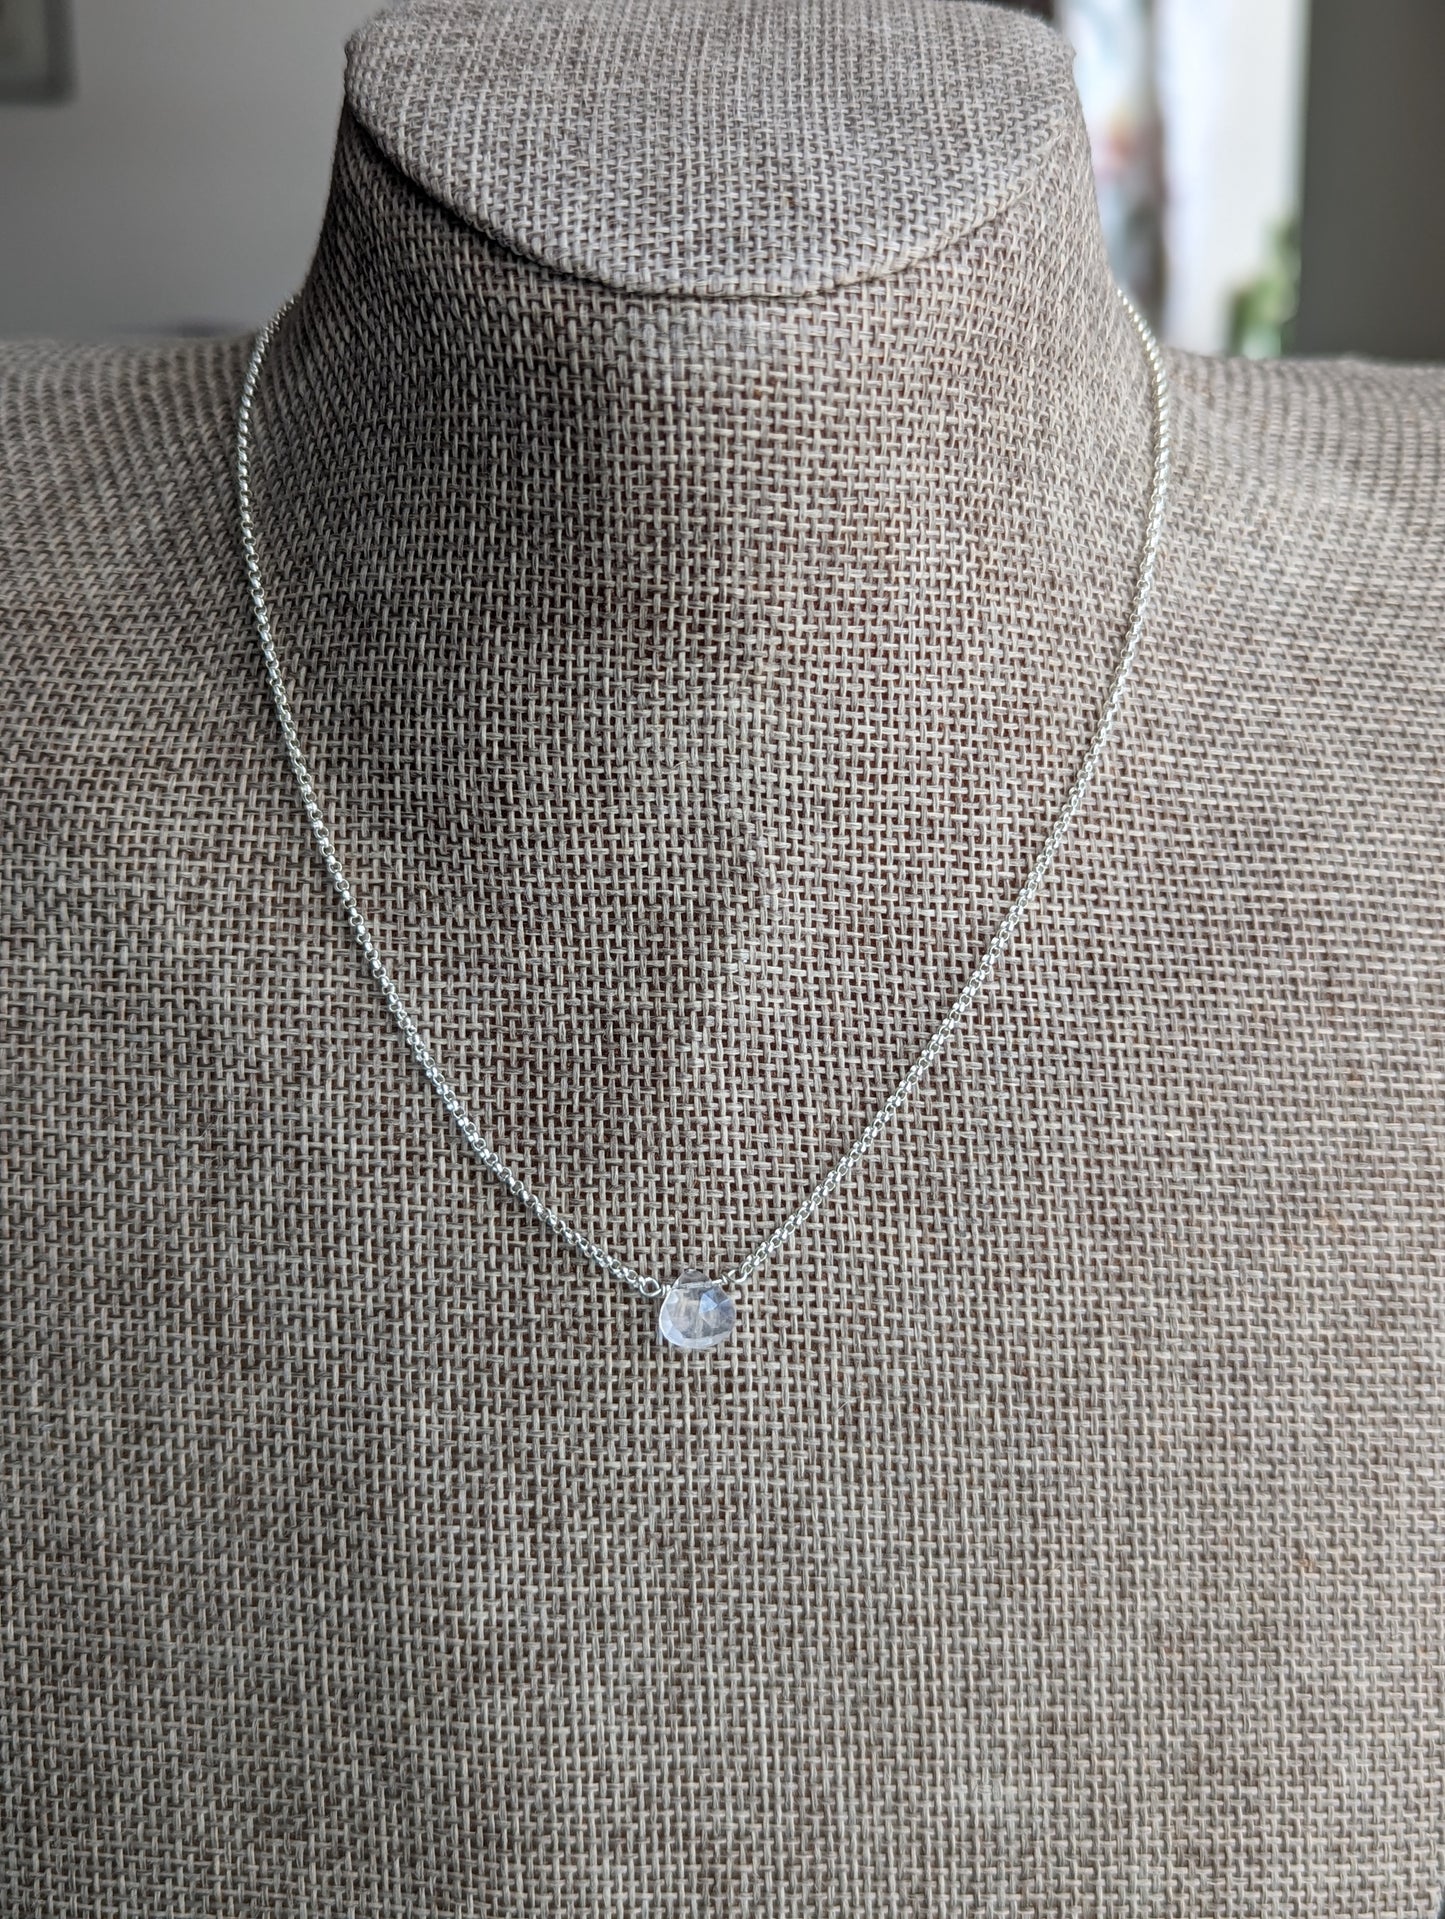 Dainty Rose Quartz Teardrop Sterling Silver Necklace